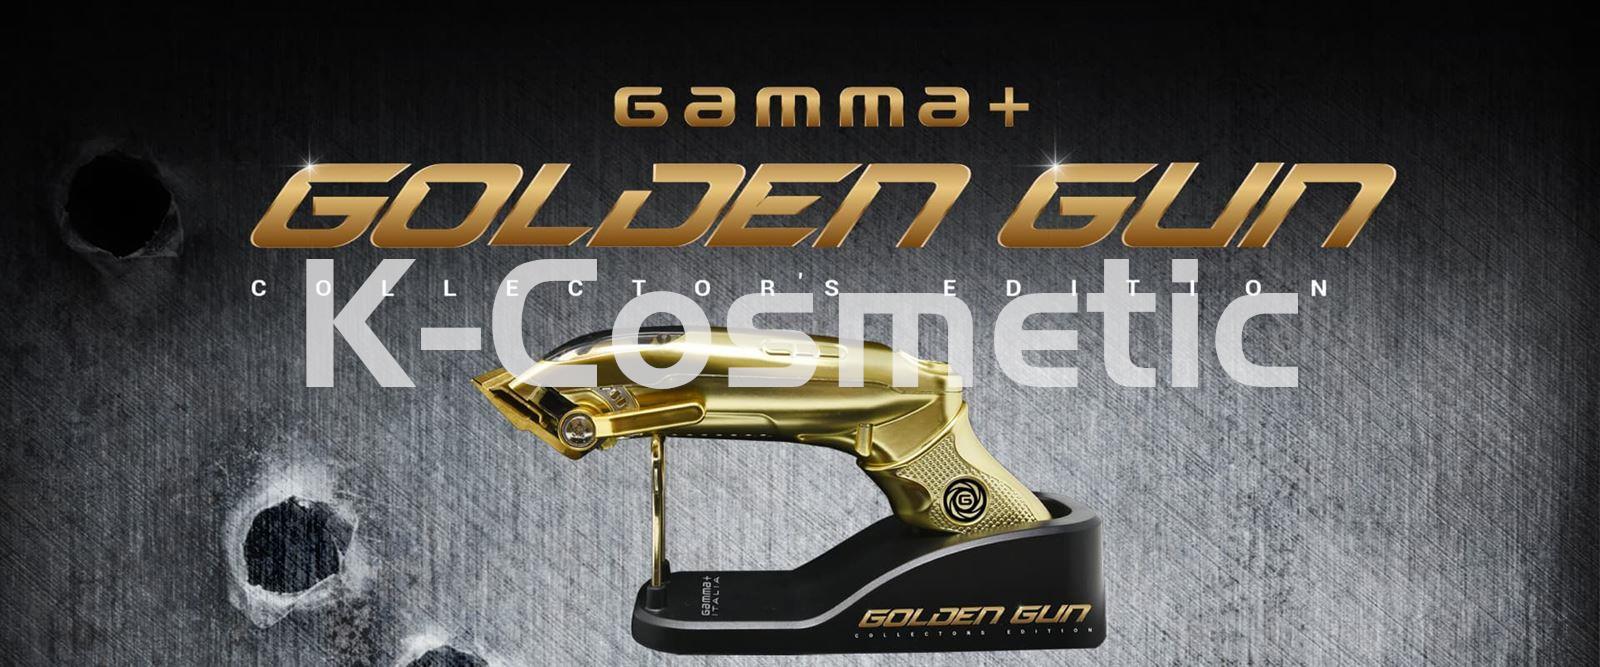 MAQUINA DE CORTE GAMMA+ GOLDEN GUN - Imagen 1